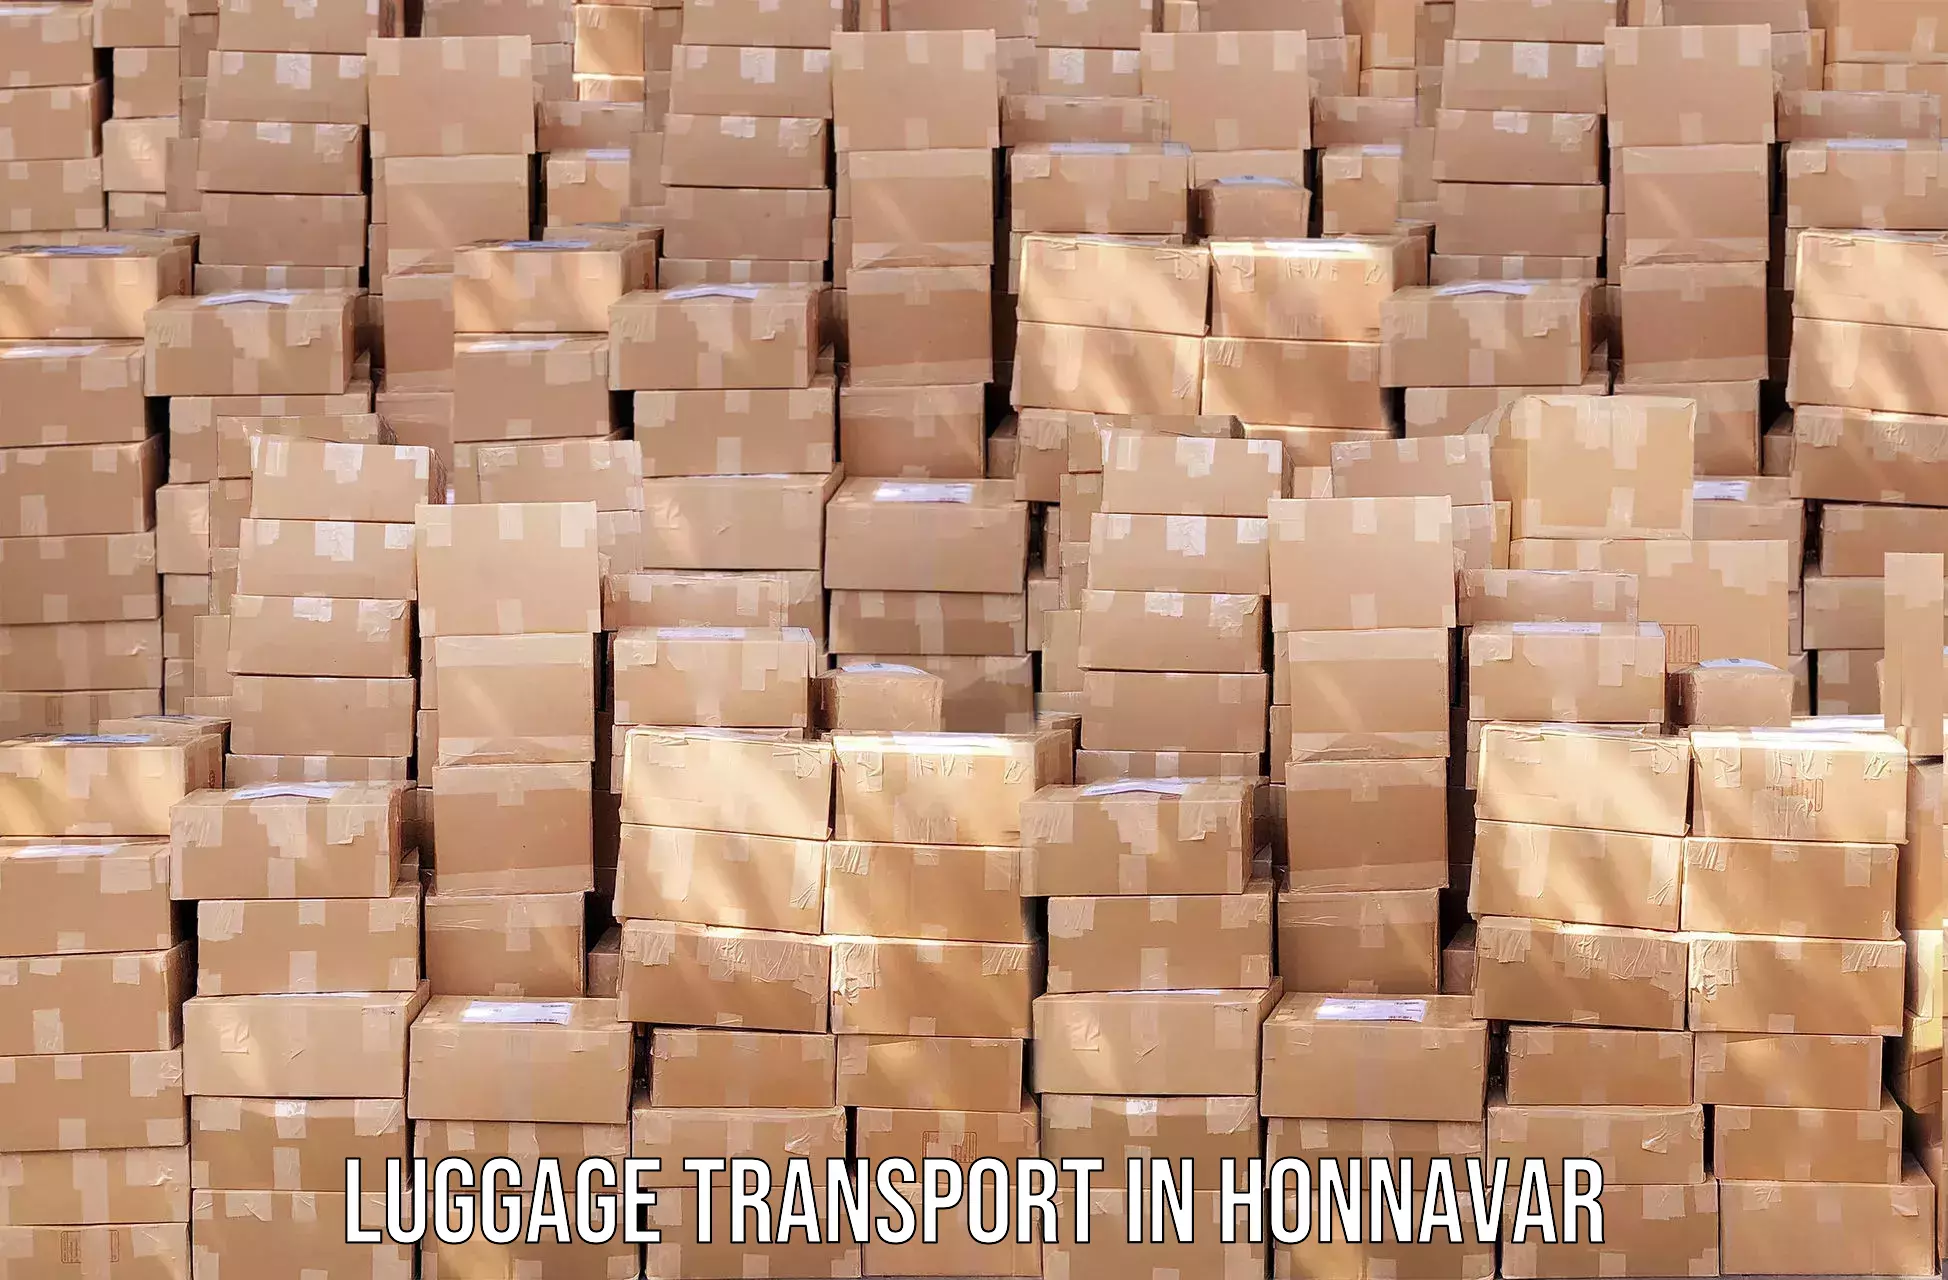 Luggage transport guidelines in Honnavar